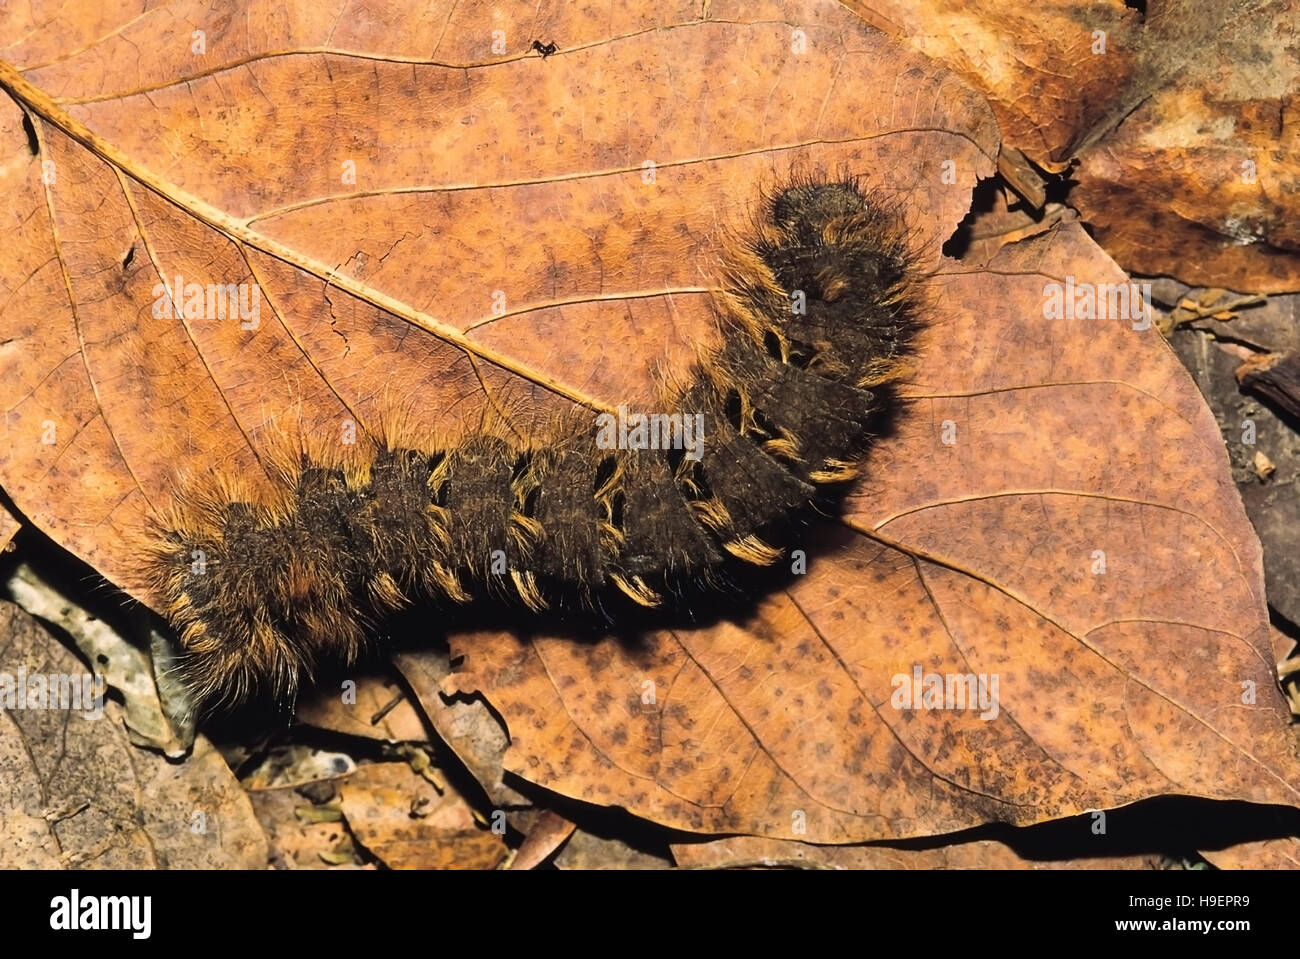 Mango hojarasca Caterpillar. Pune, Maharashtra, India. Foto de stock